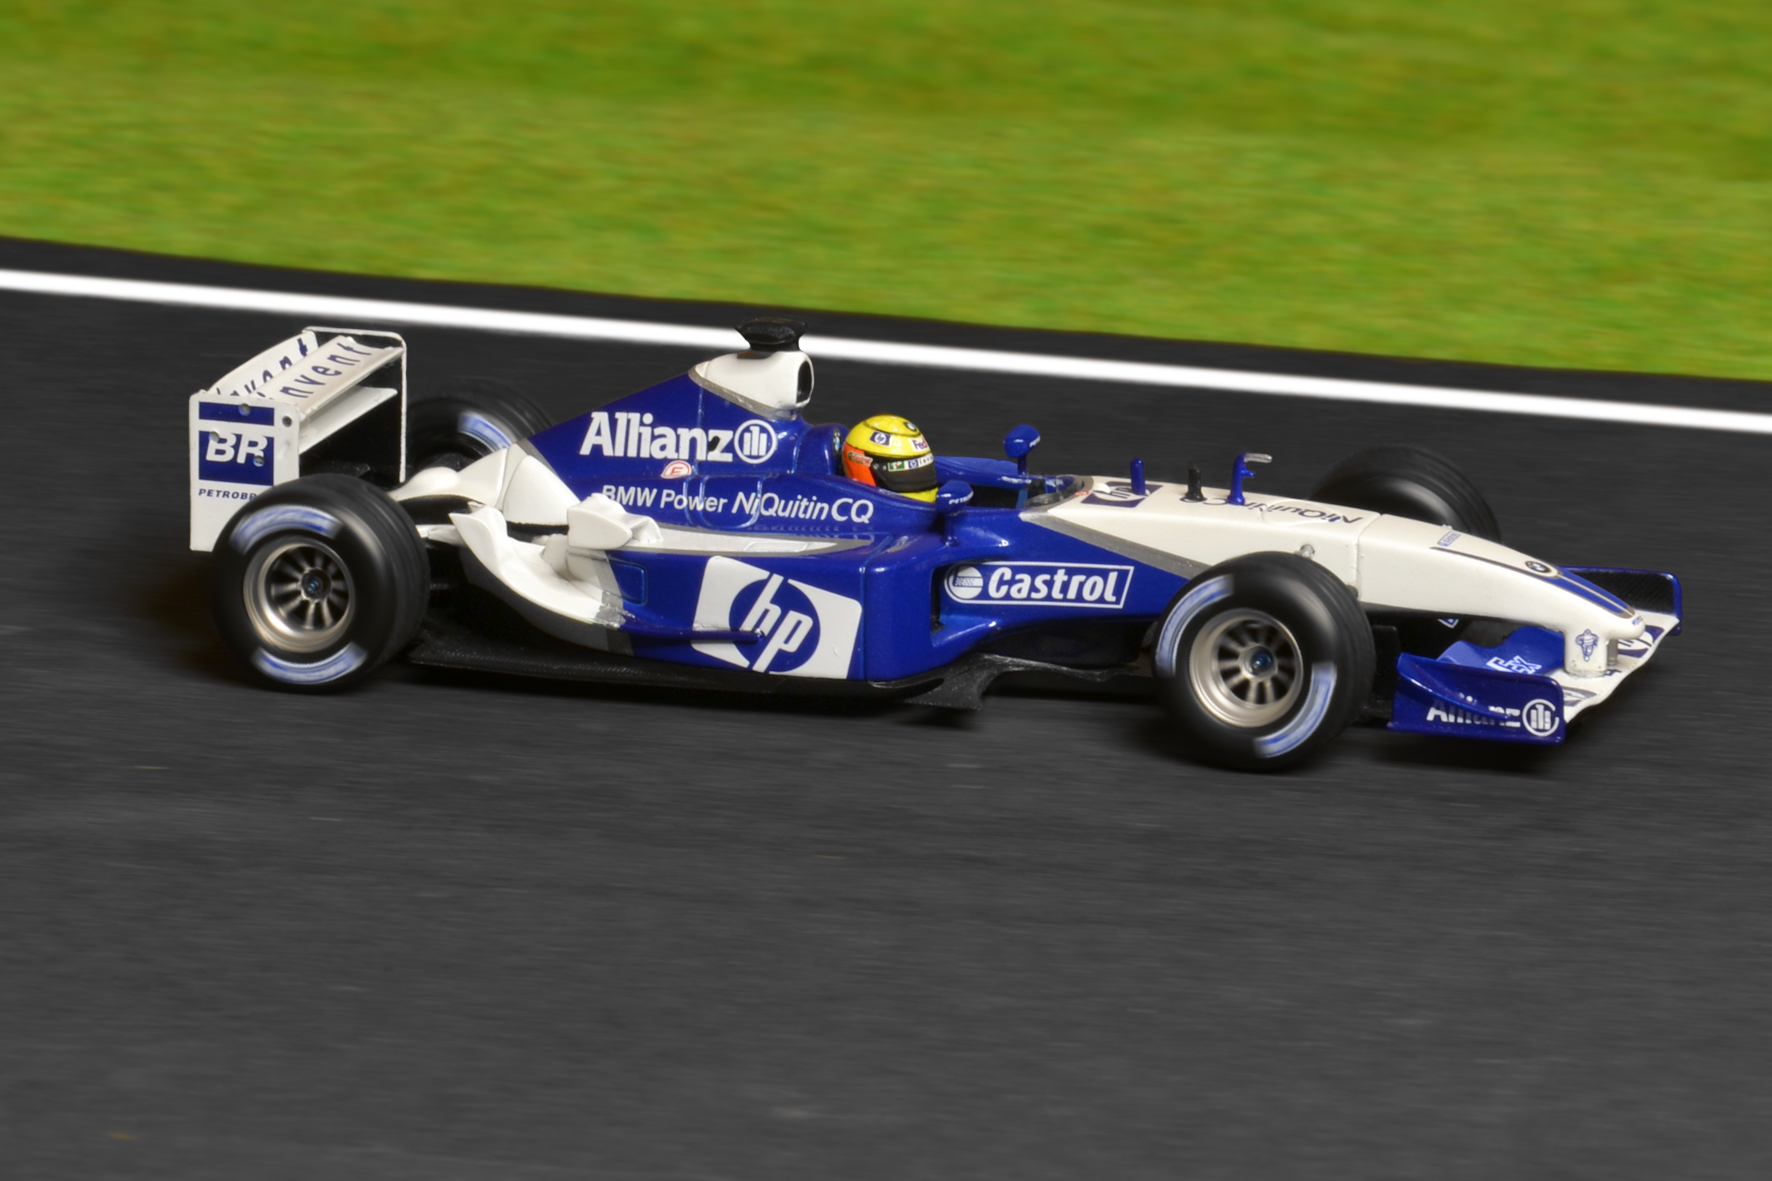 Williams FW25 Ralf Schumacher 2003 - Minichamps 1:43